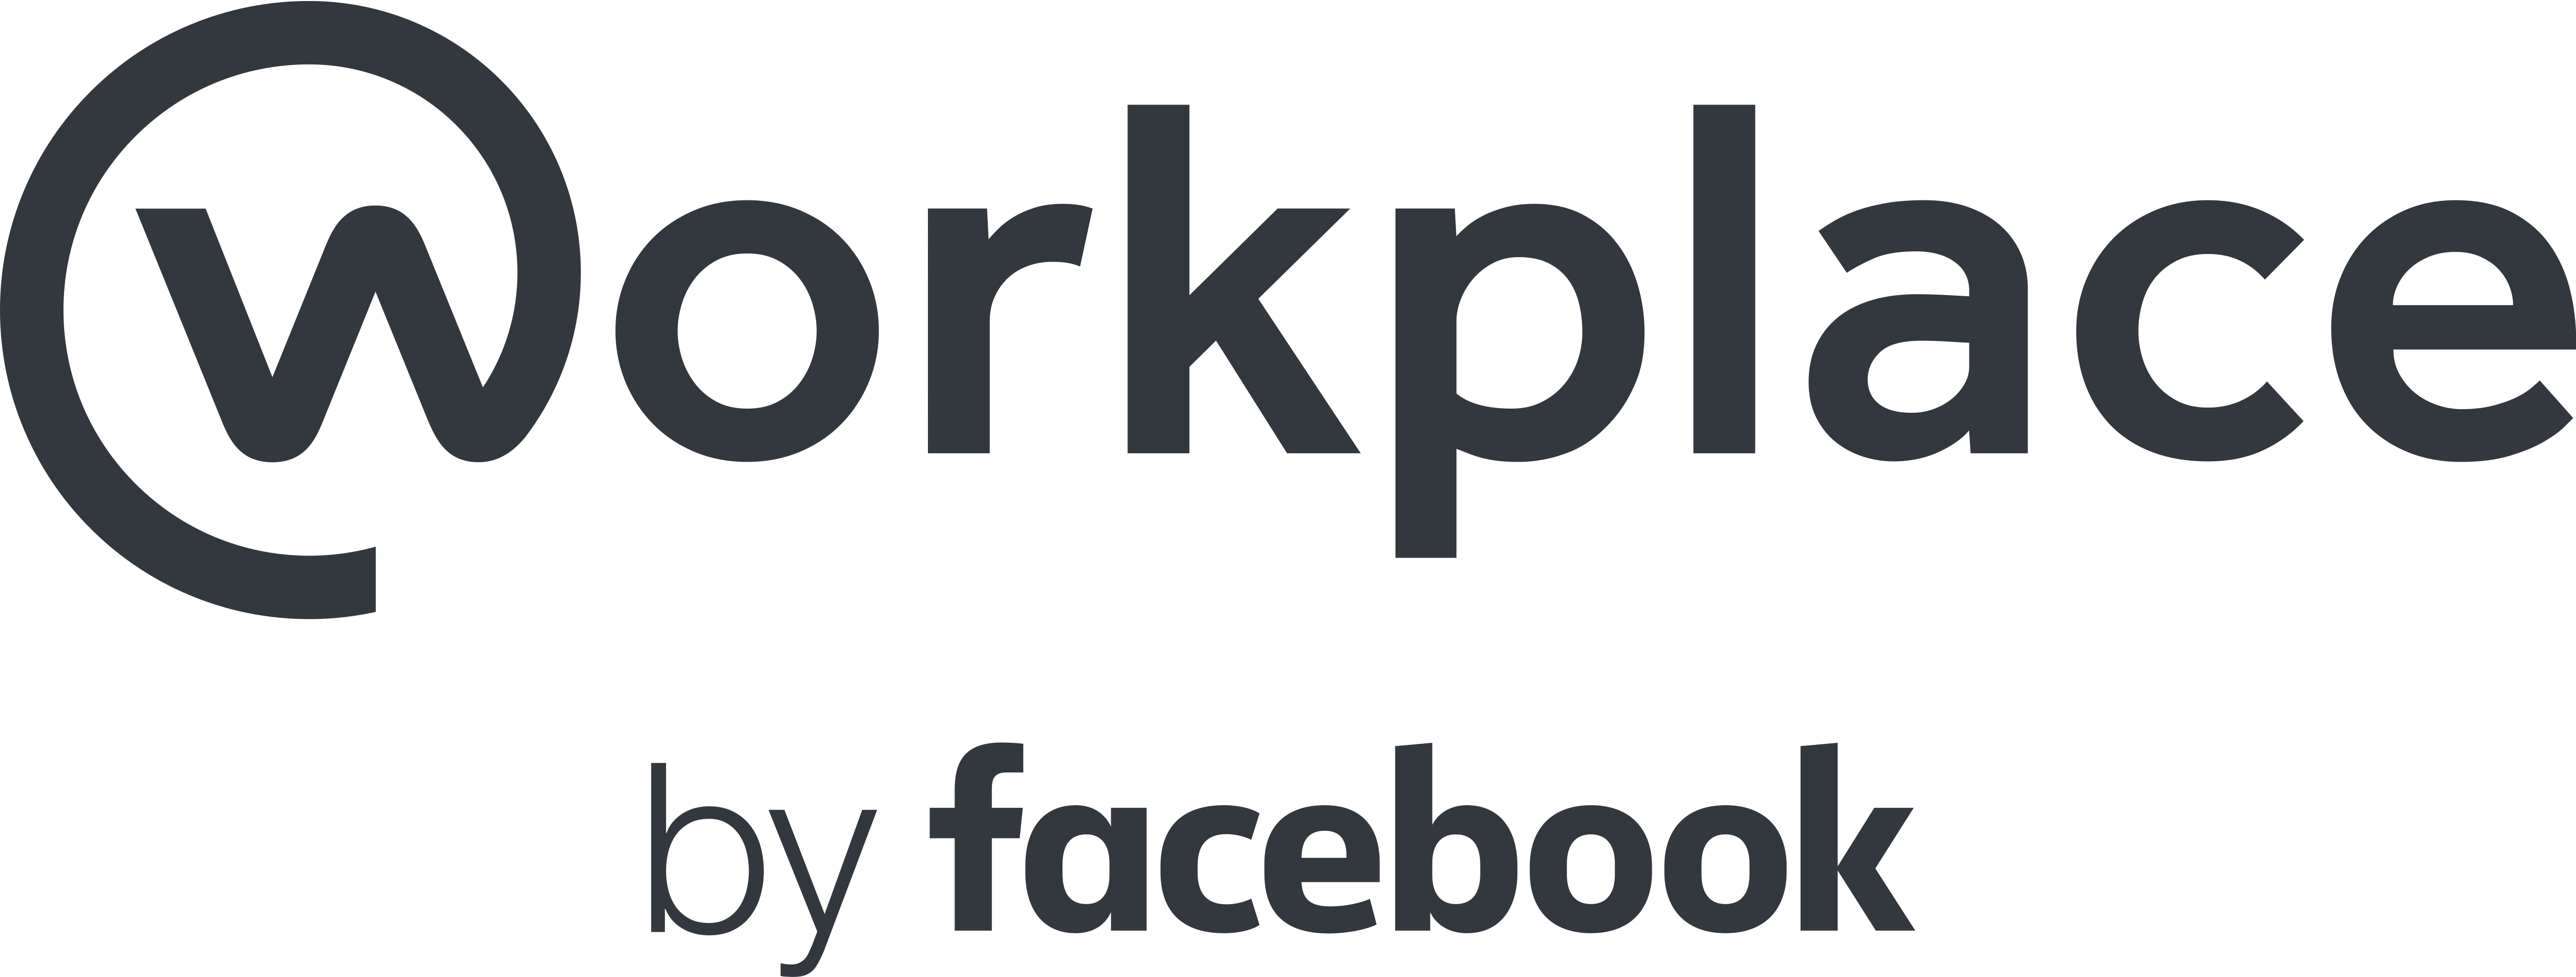 Workplace Logo - Logo Facebook Workplace Copy